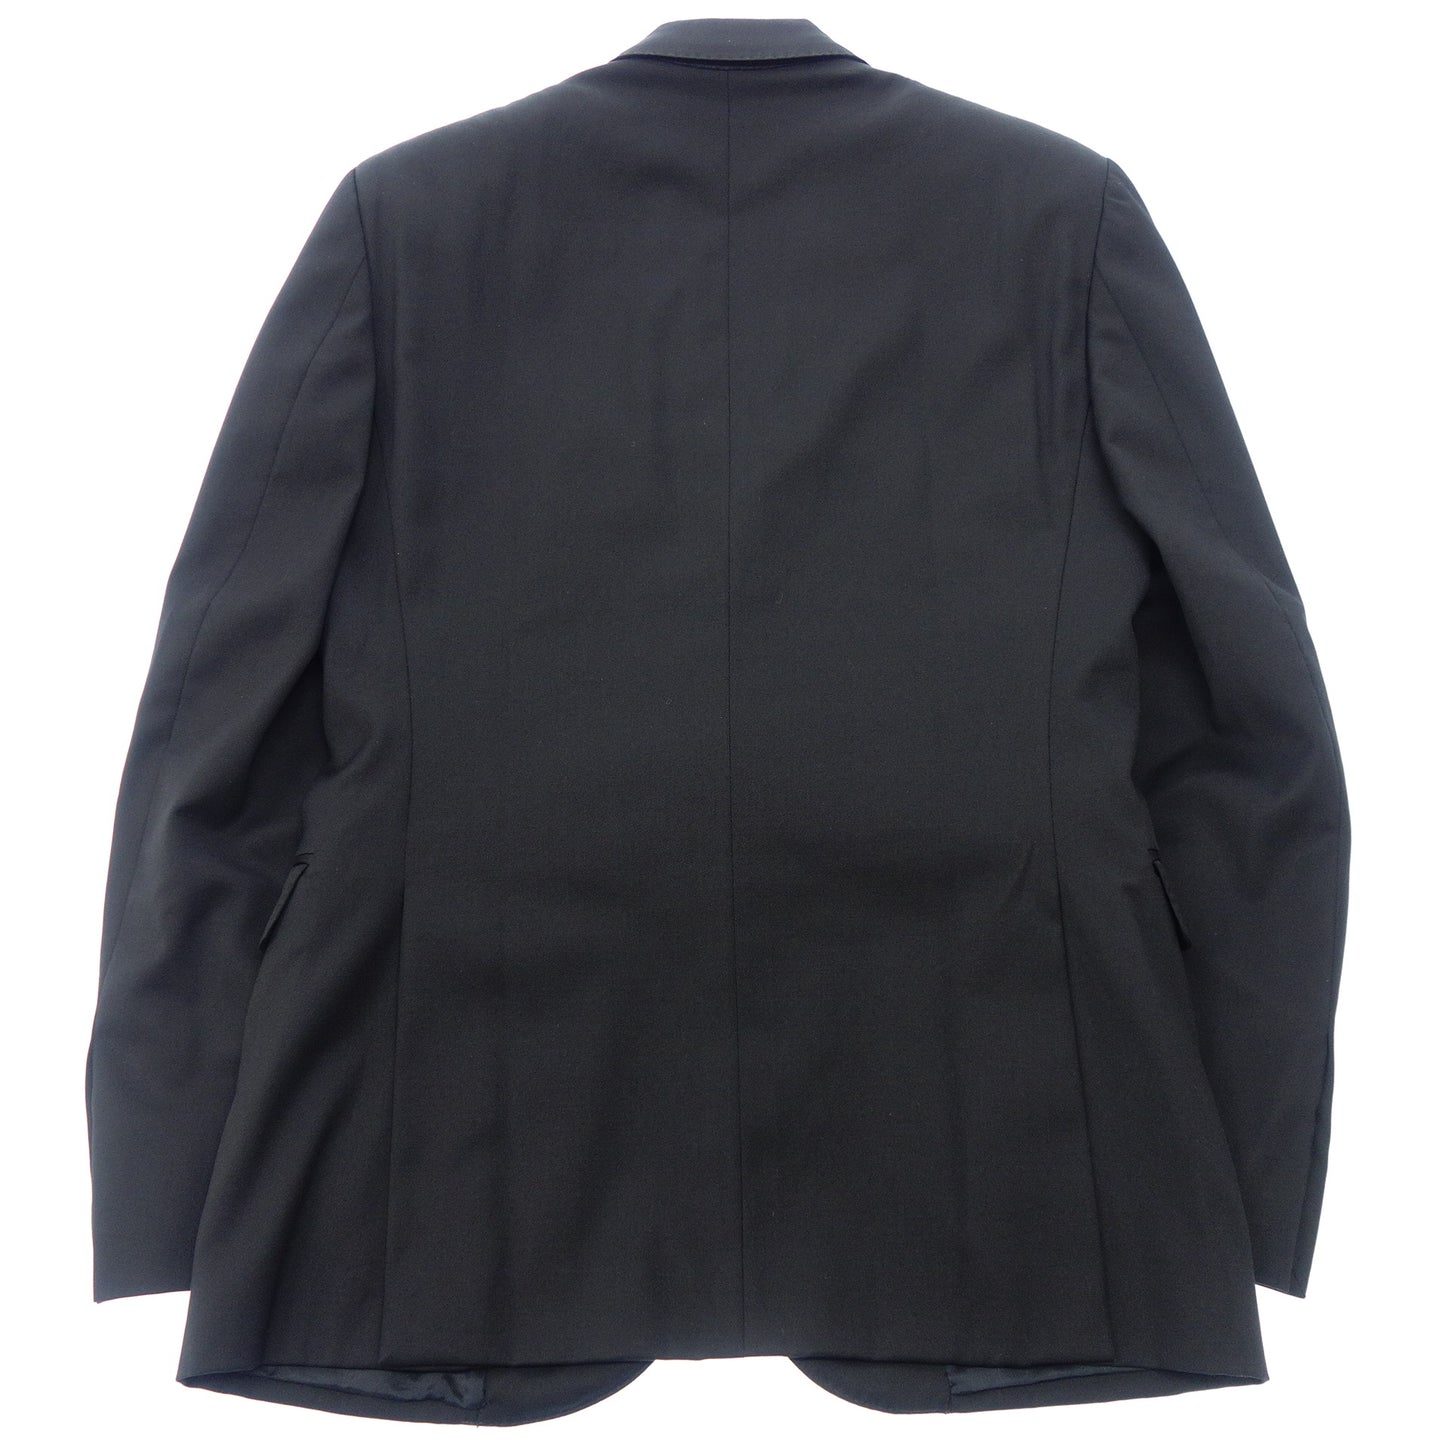 Used ◆ Polo Ralph Lauren 2B Tailored Jacket Men's Black 36 POLO RALPH LAUREN [AFA21] 